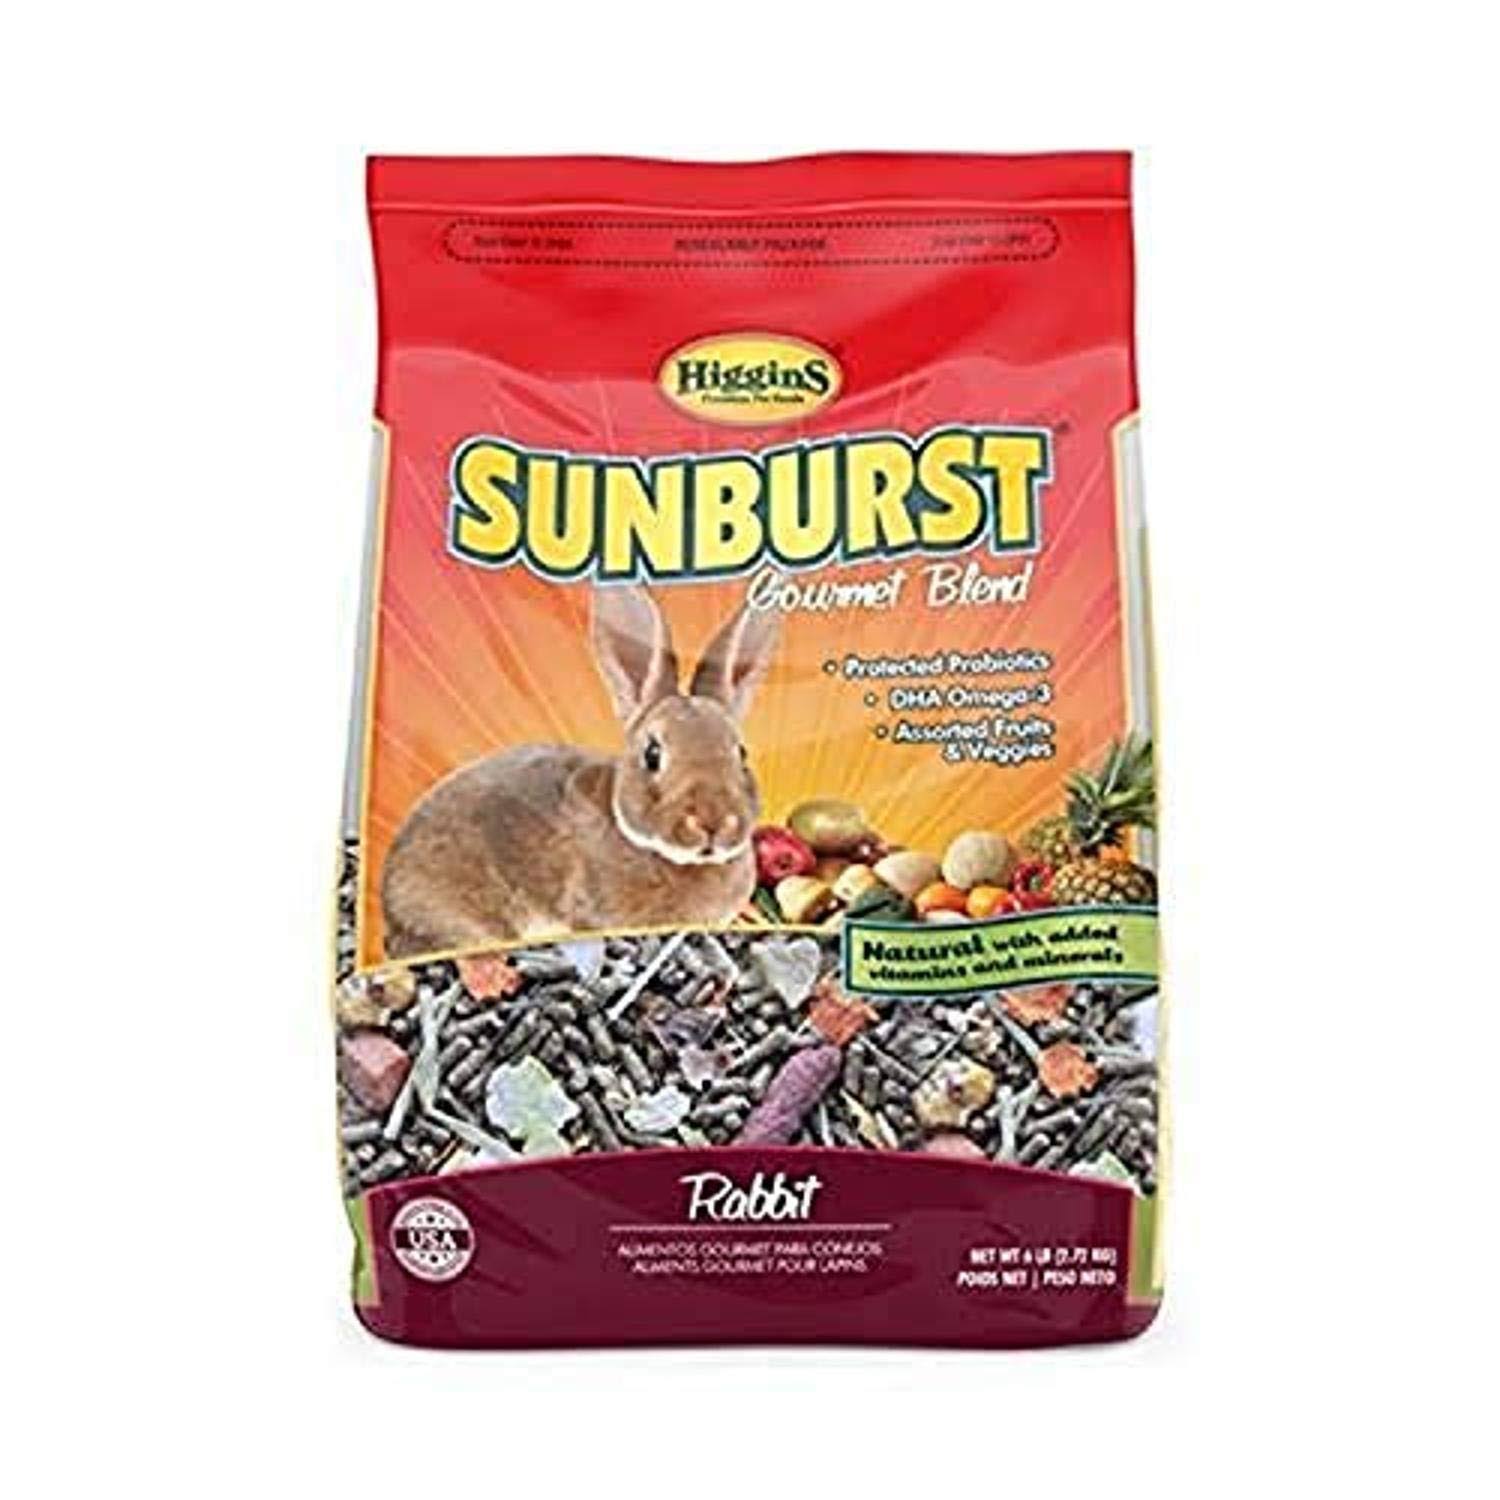 Higgins Sunburst Gourmet Rabbit Food Mix - 6lbs